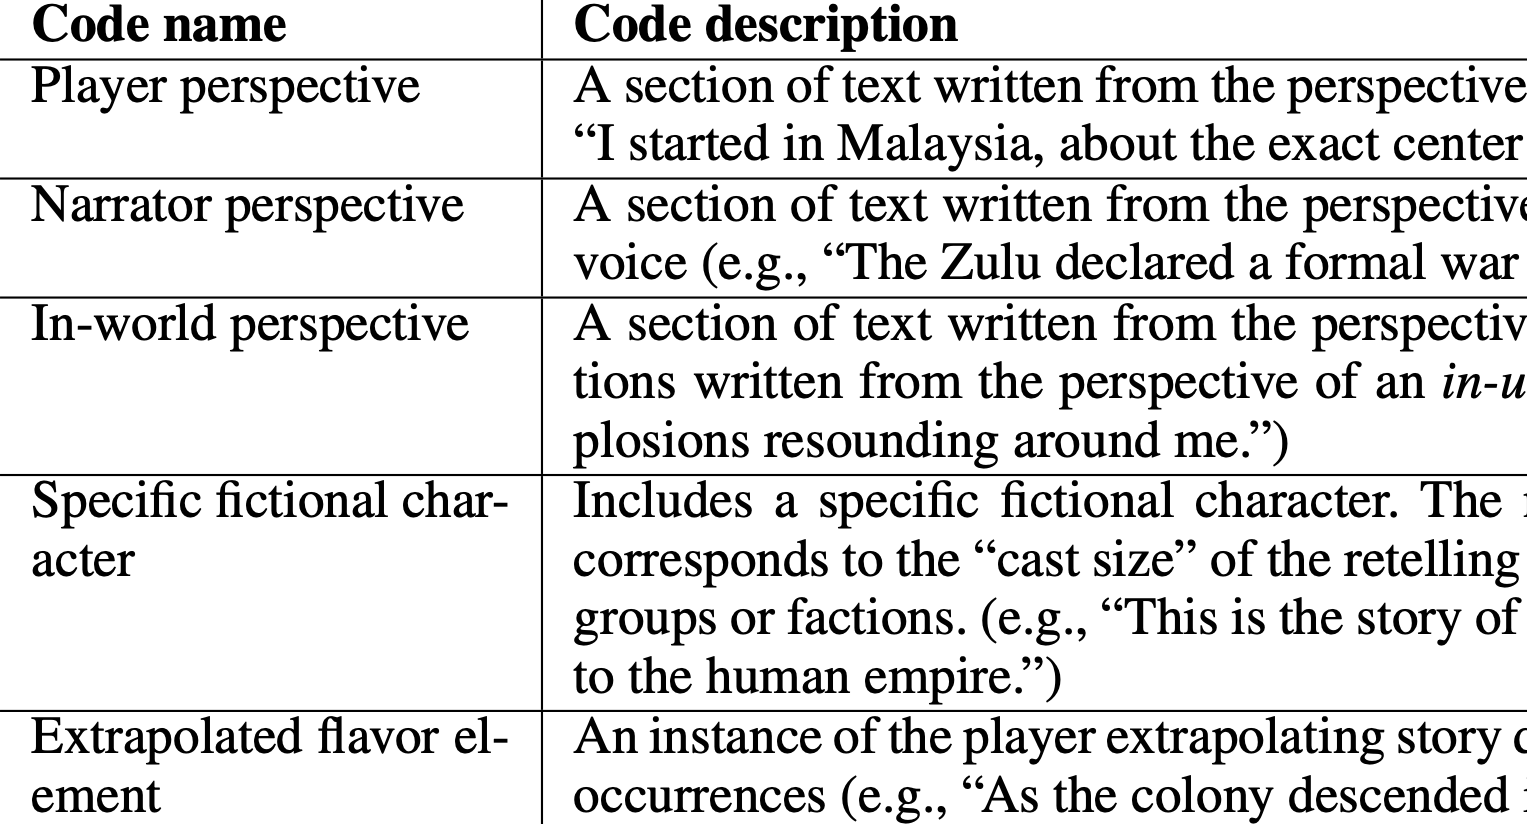 Partial screenshot of codebook that notes dimensions of variation between Civilization VI and Stellaris retellings, from the AIIDE 2019 paper linked below.